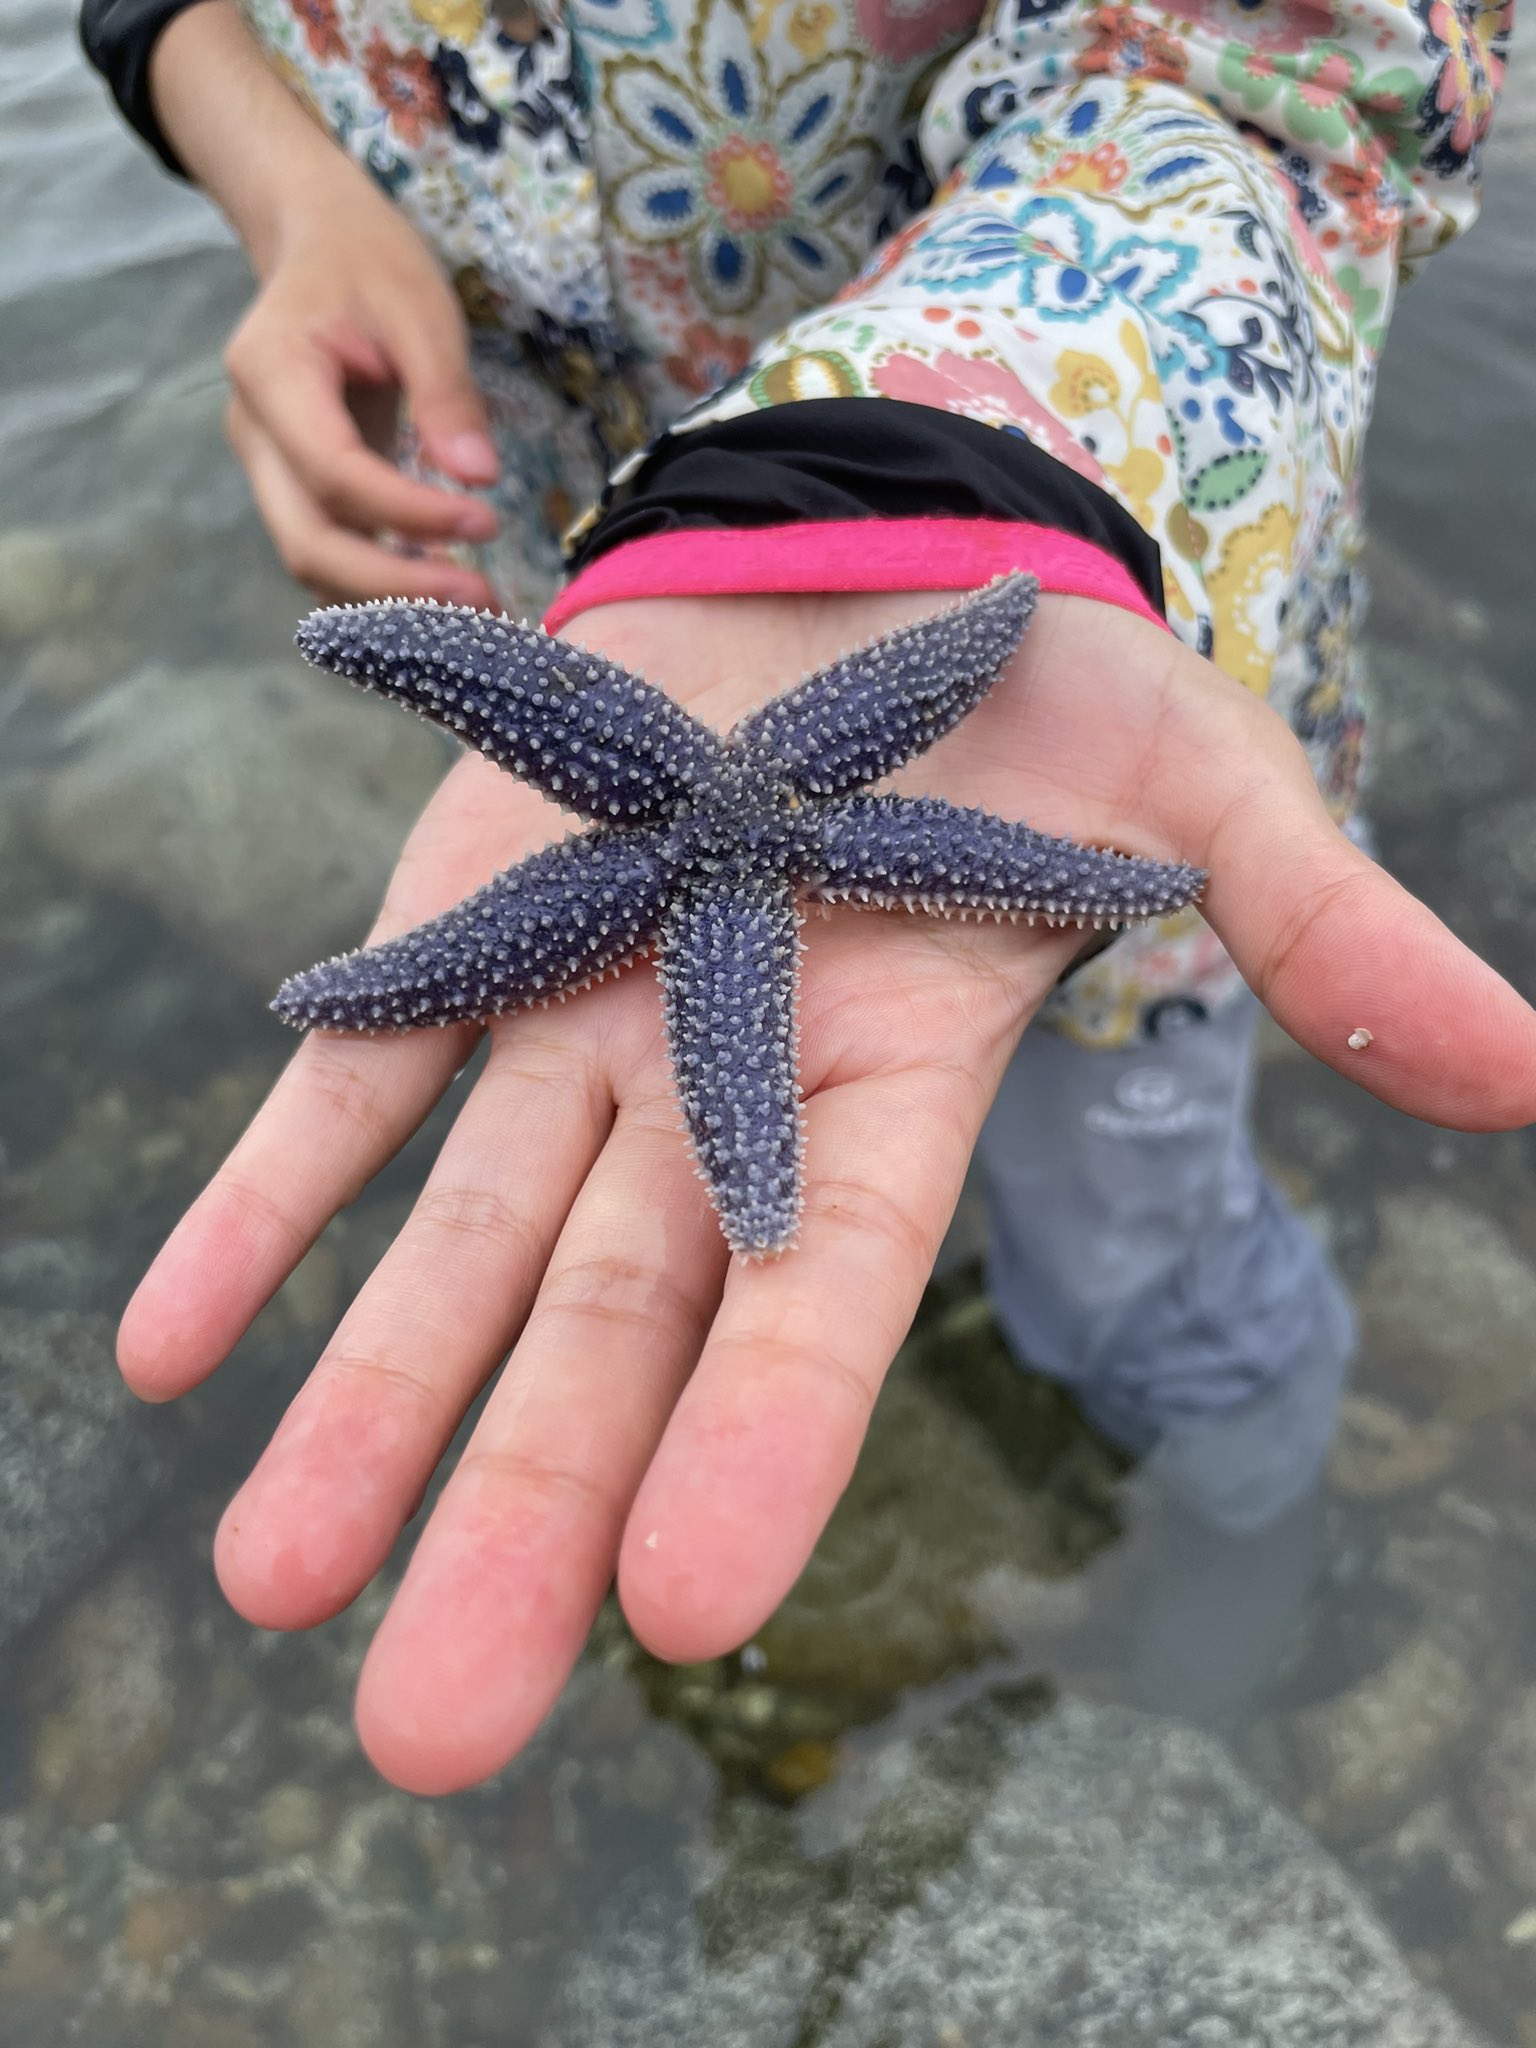 Seeking Sea Stars (. National Park Service)